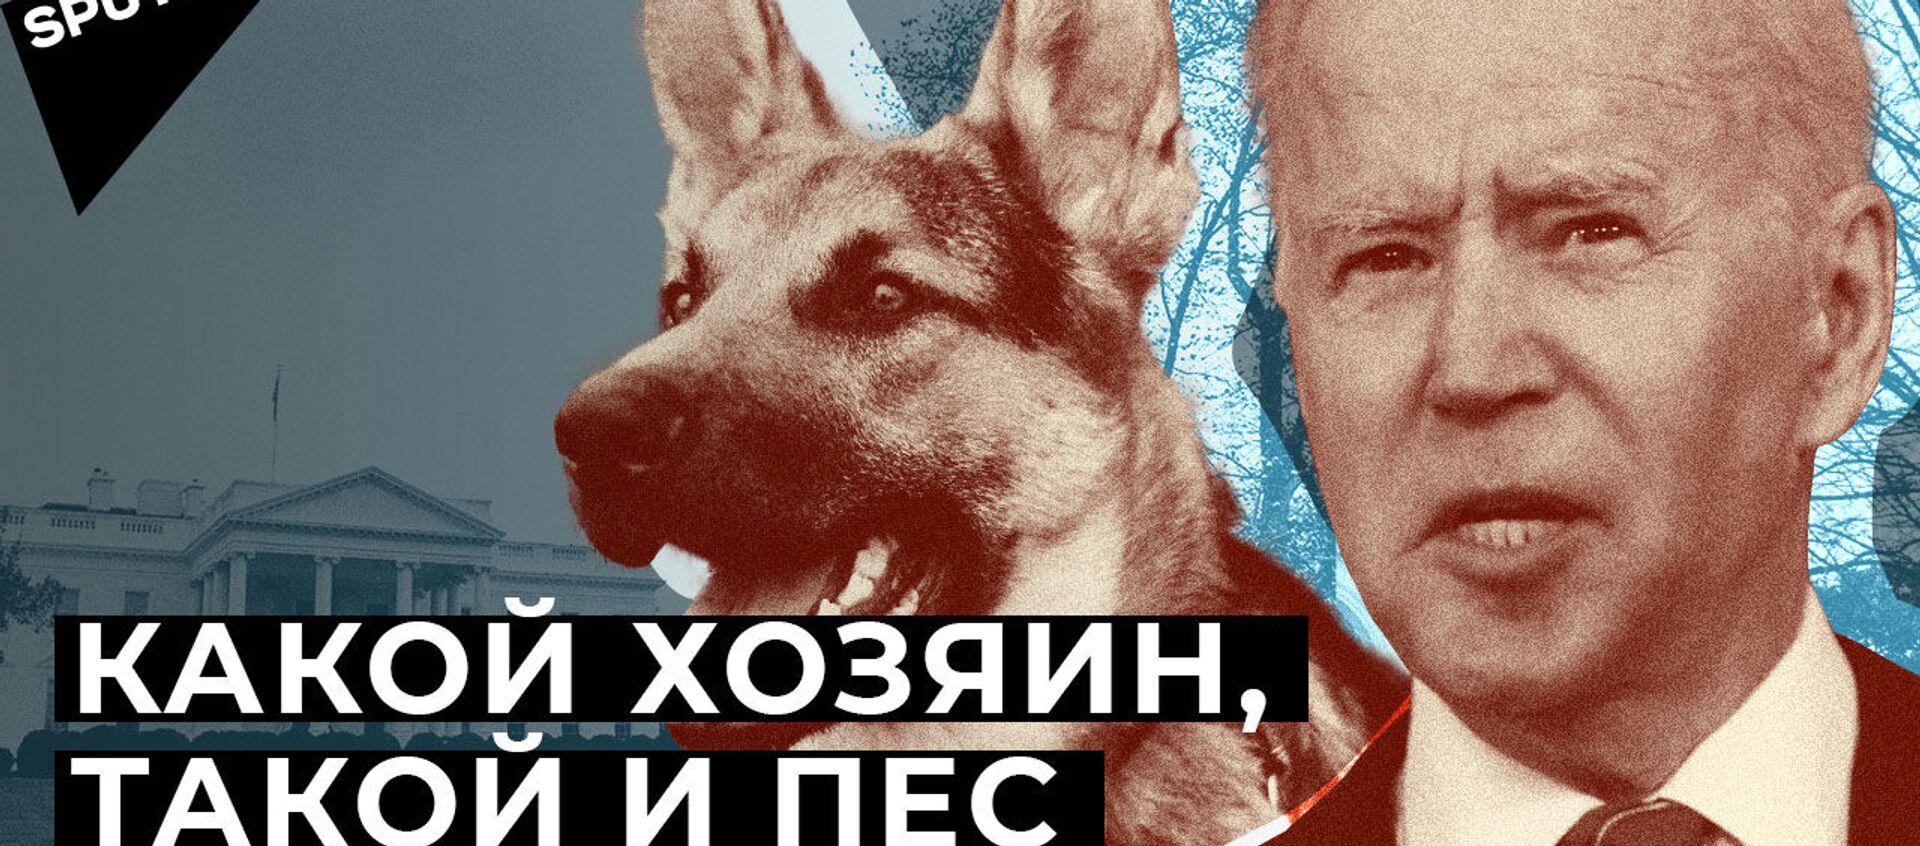 Собака Джо Байдена терроризирует сотрудников Белого дома - Sputnik Армения, 1920, 06.04.2021